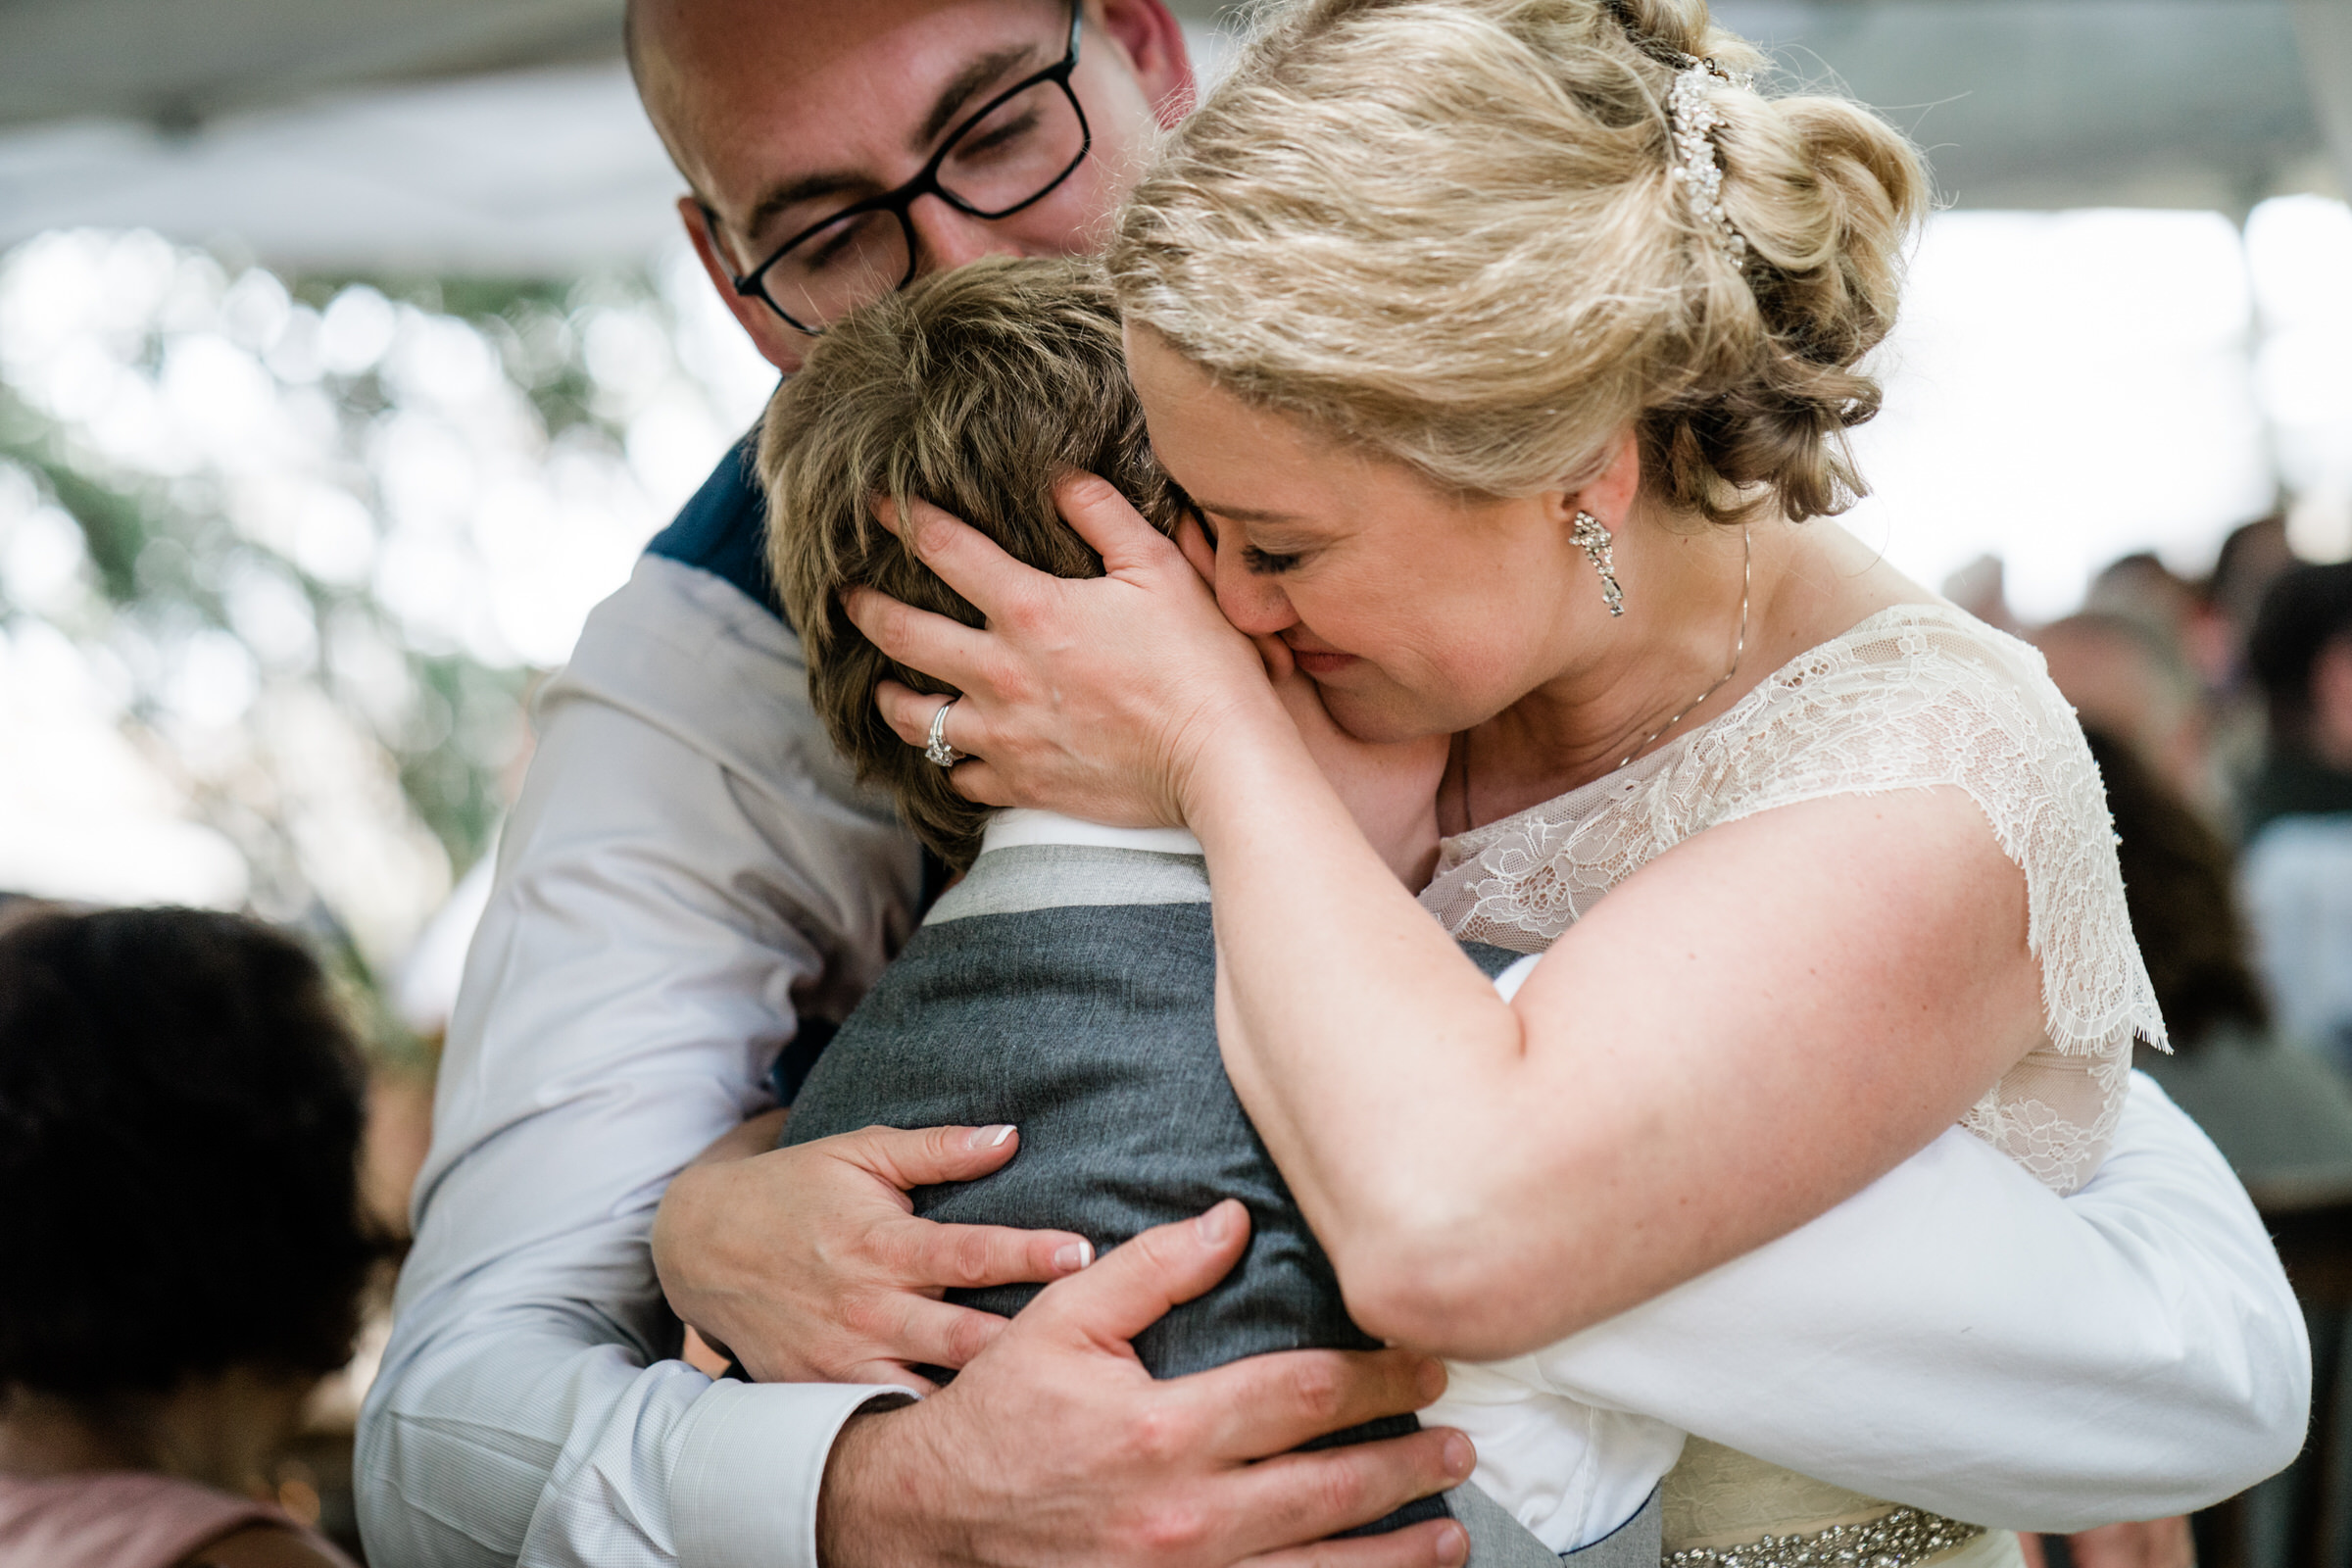 Wayfarer Whidbey Island Wedding: Sara the bride embraces her new stepson after his heartfelt toast 